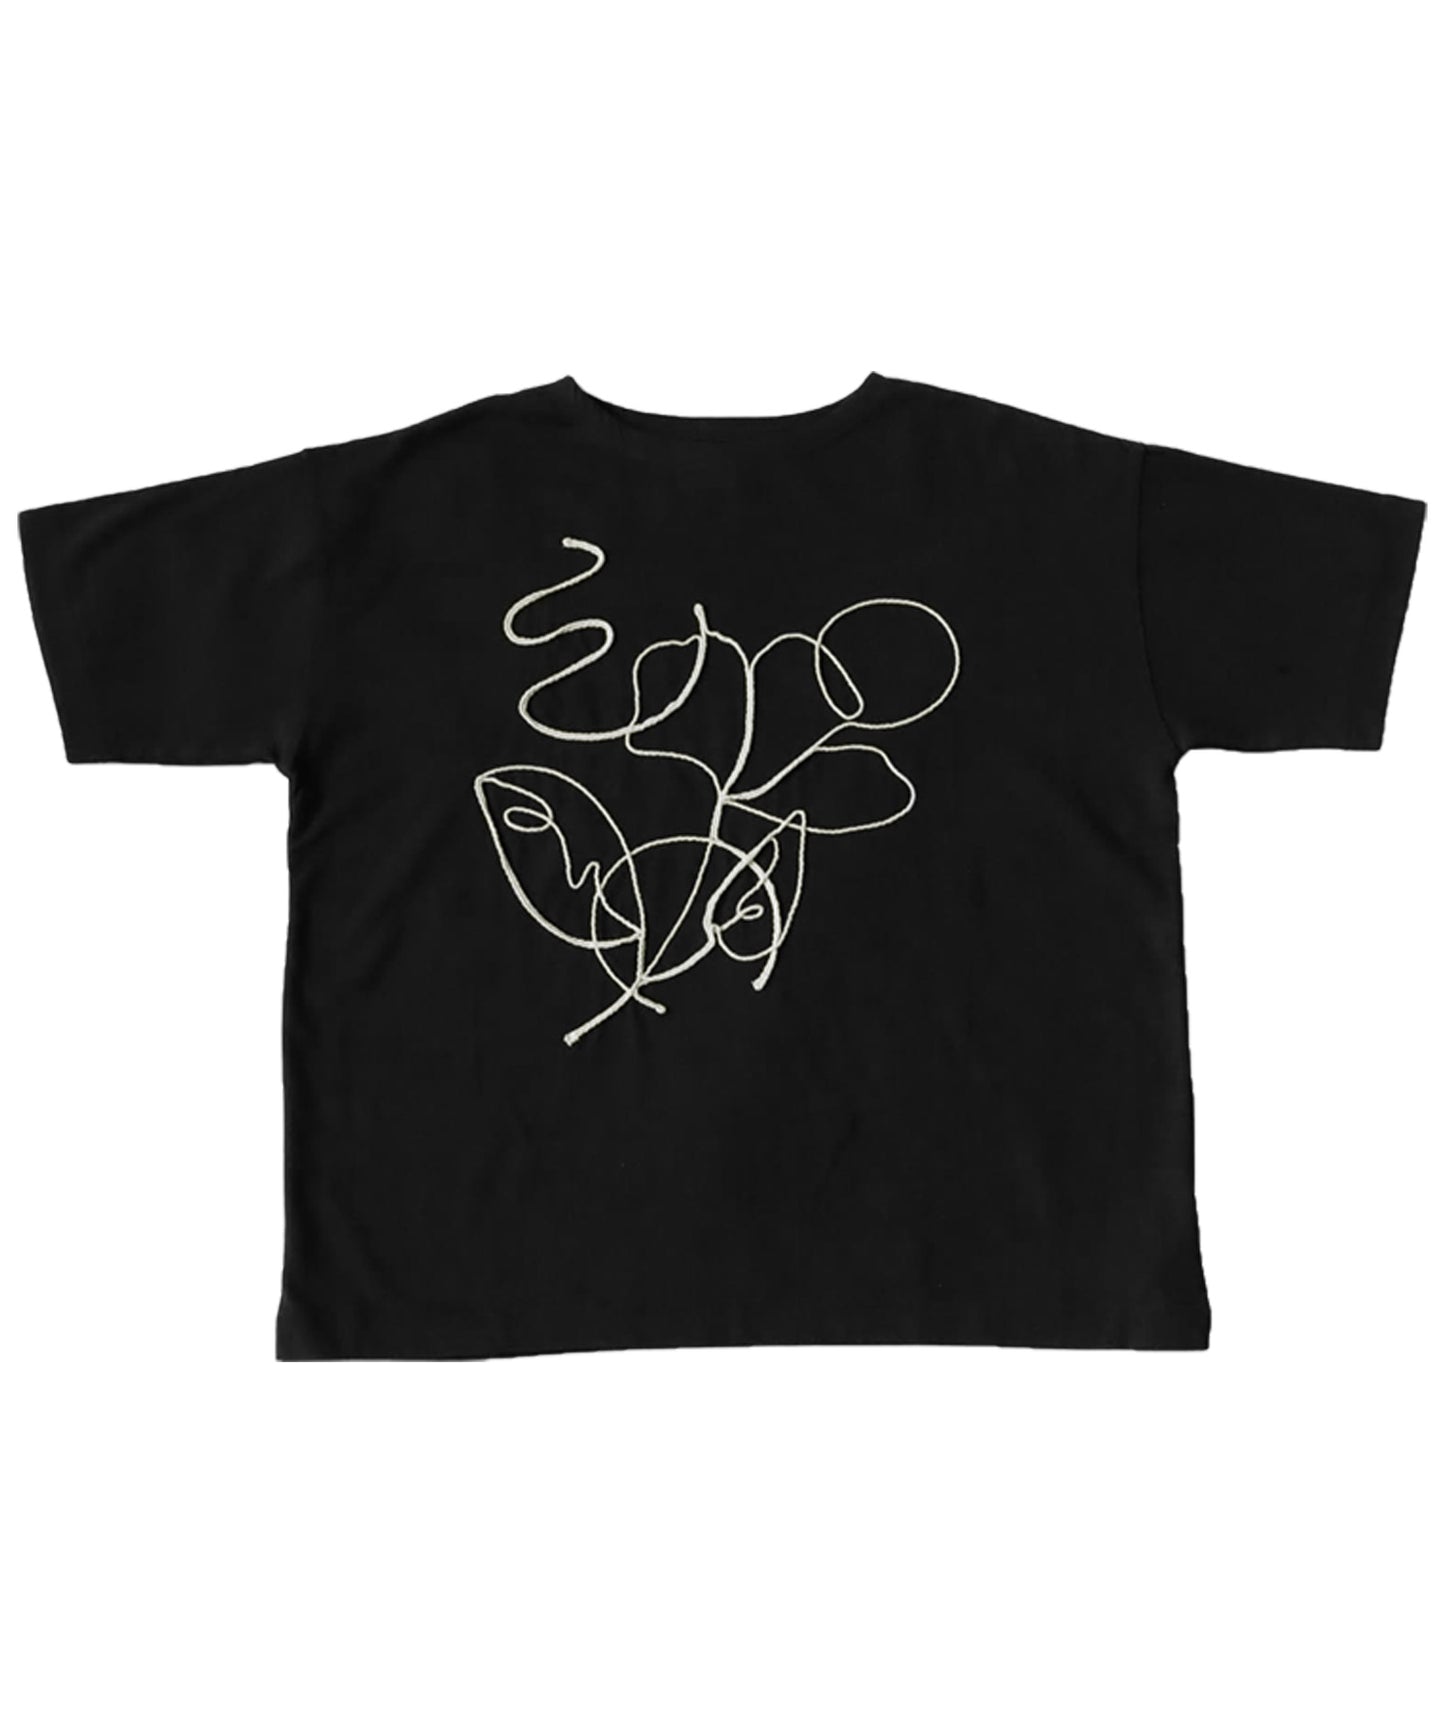 Rope Art designed T -shirt Ladies T -shirt Short Sleeve